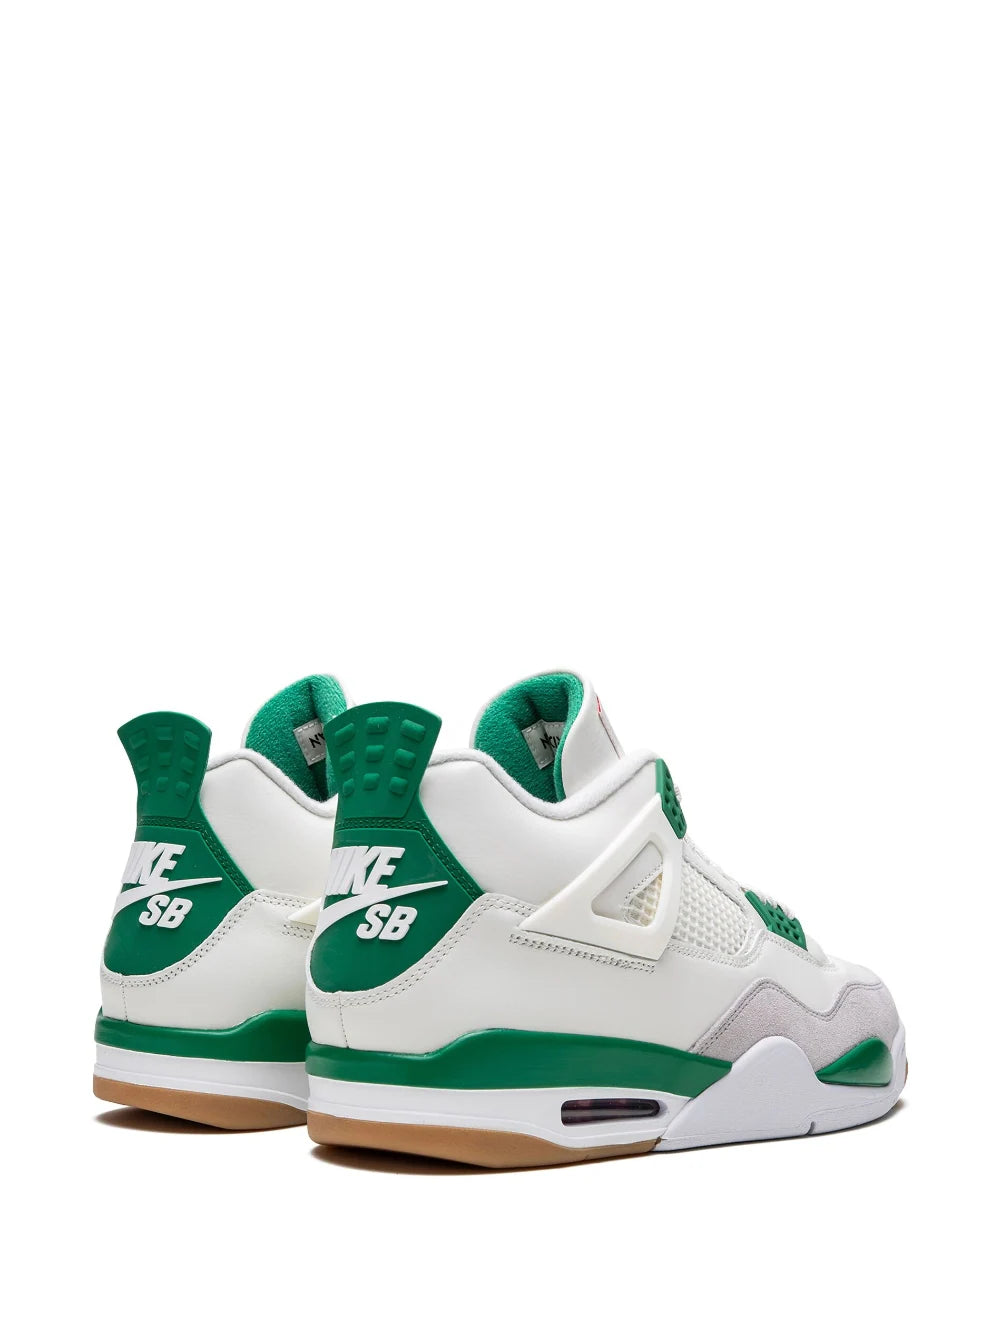 Air Jordan Retro 4 Pine Green